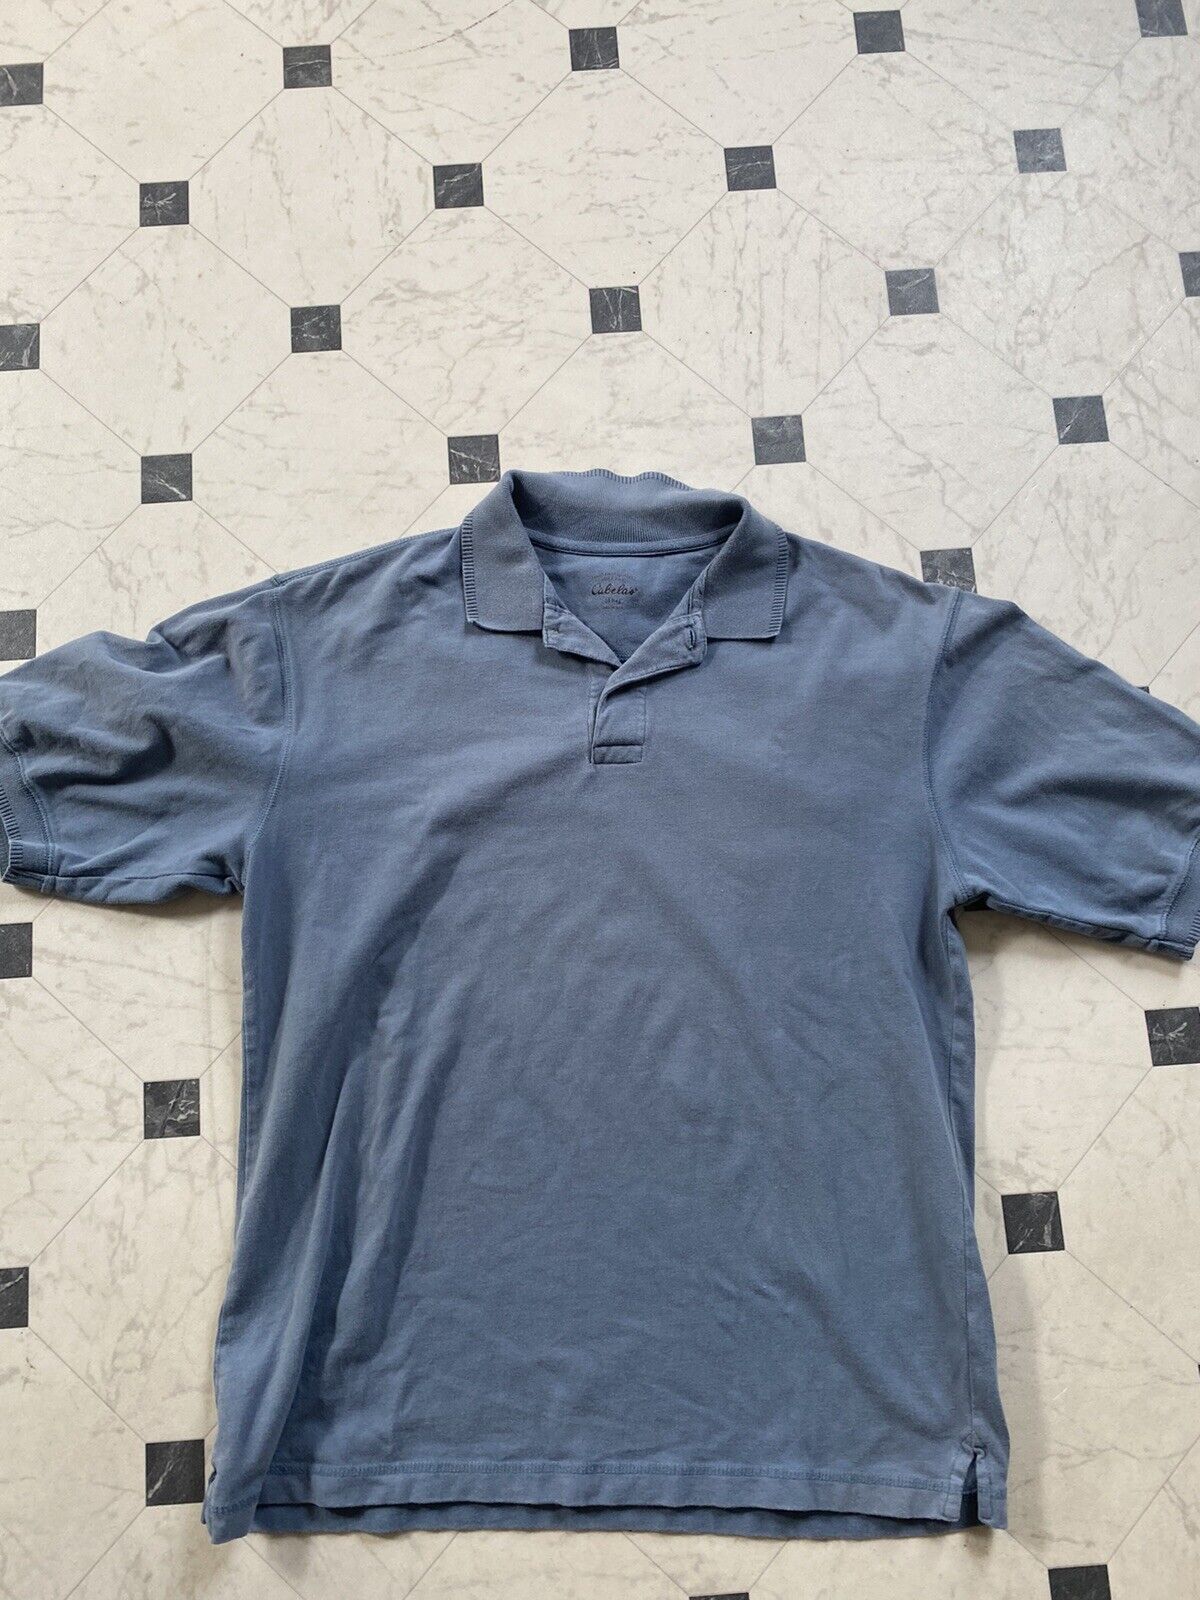 Cabela’s Polo Shirt Adult Medium Blue Regular Short Sleeve Cotton Casual Mens **